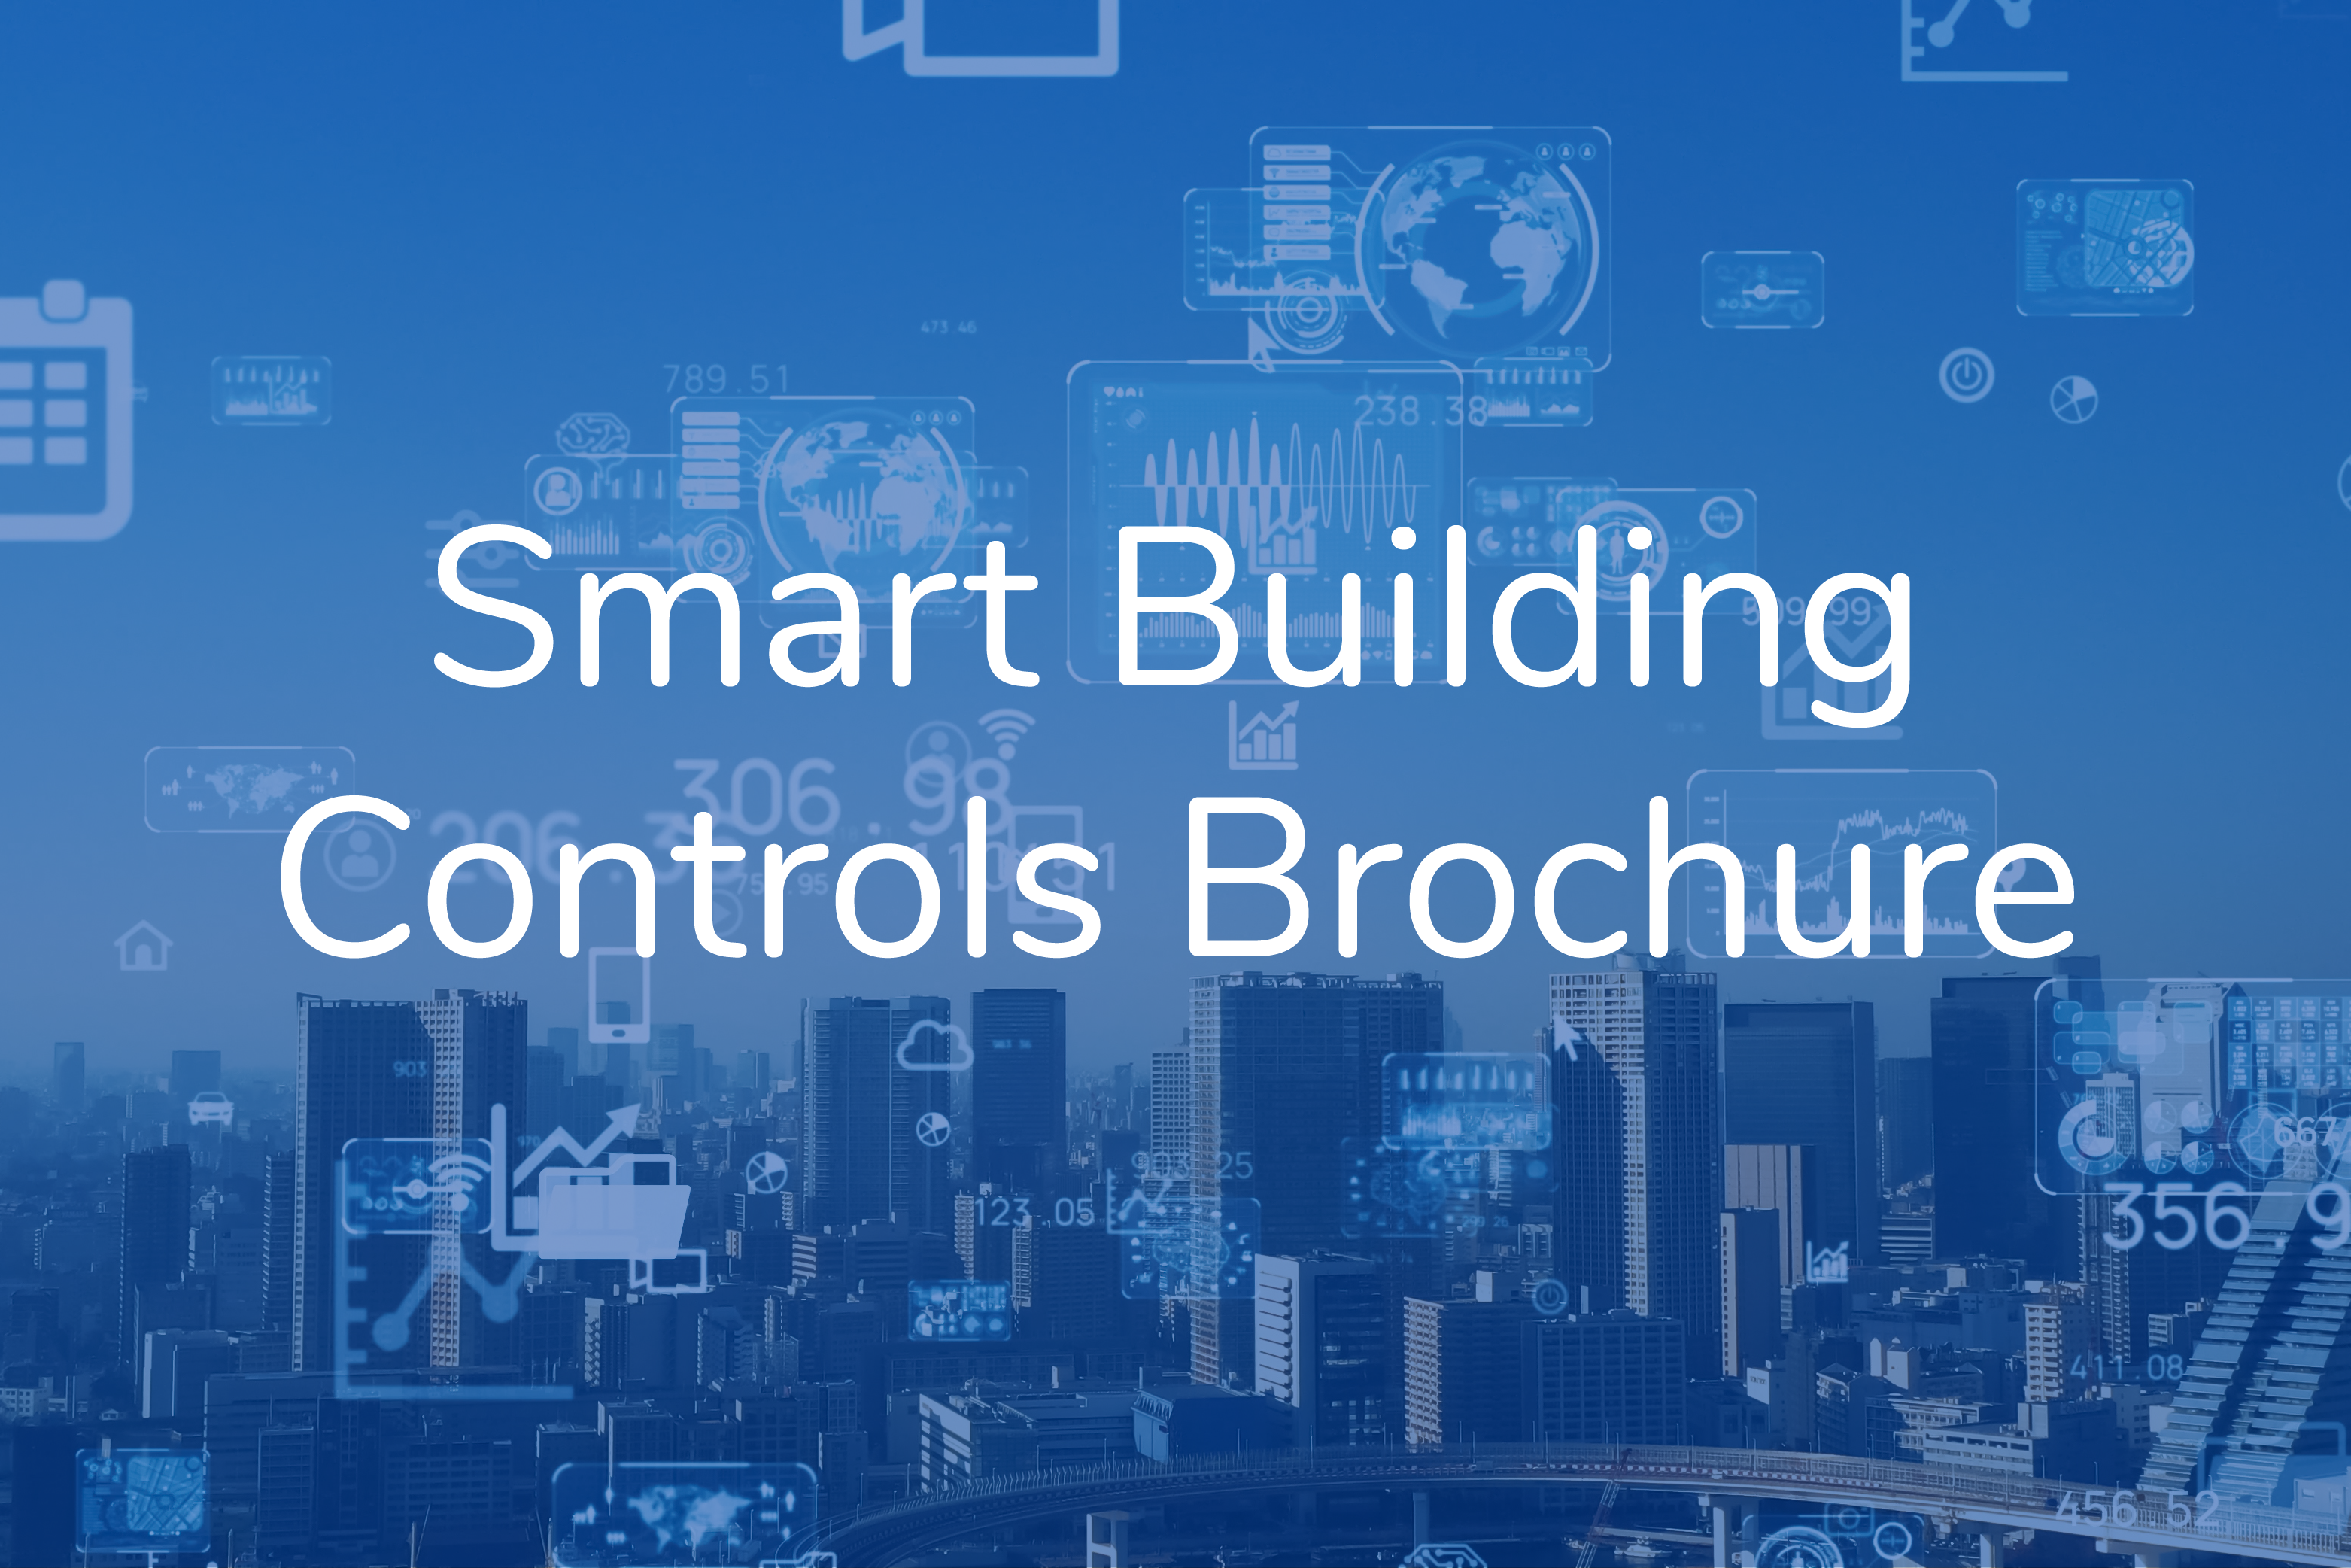 Smart building controls city with Smart building controls brochure text